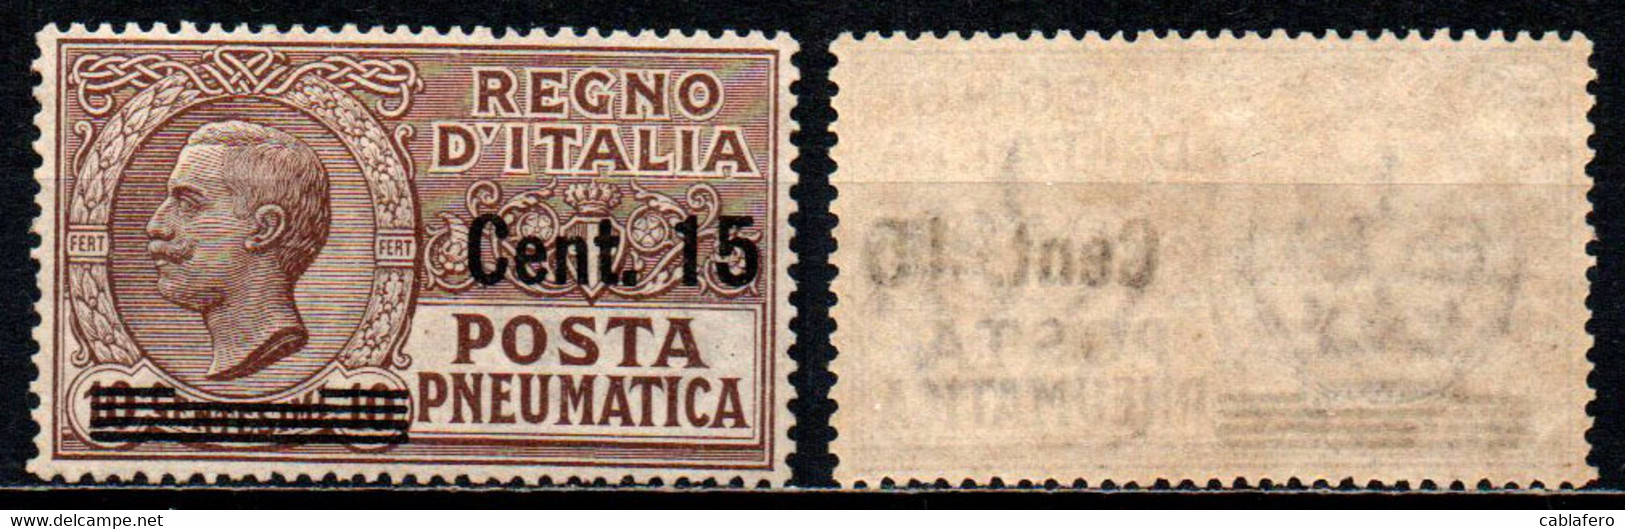 ITALIA REGNO - 1924 - EFFIGIE DI VITTORIO EMANUELE III - SOPRASTAMPA DA 15 CENT. SU 10 CENT. - MNH - Pneumatische Post